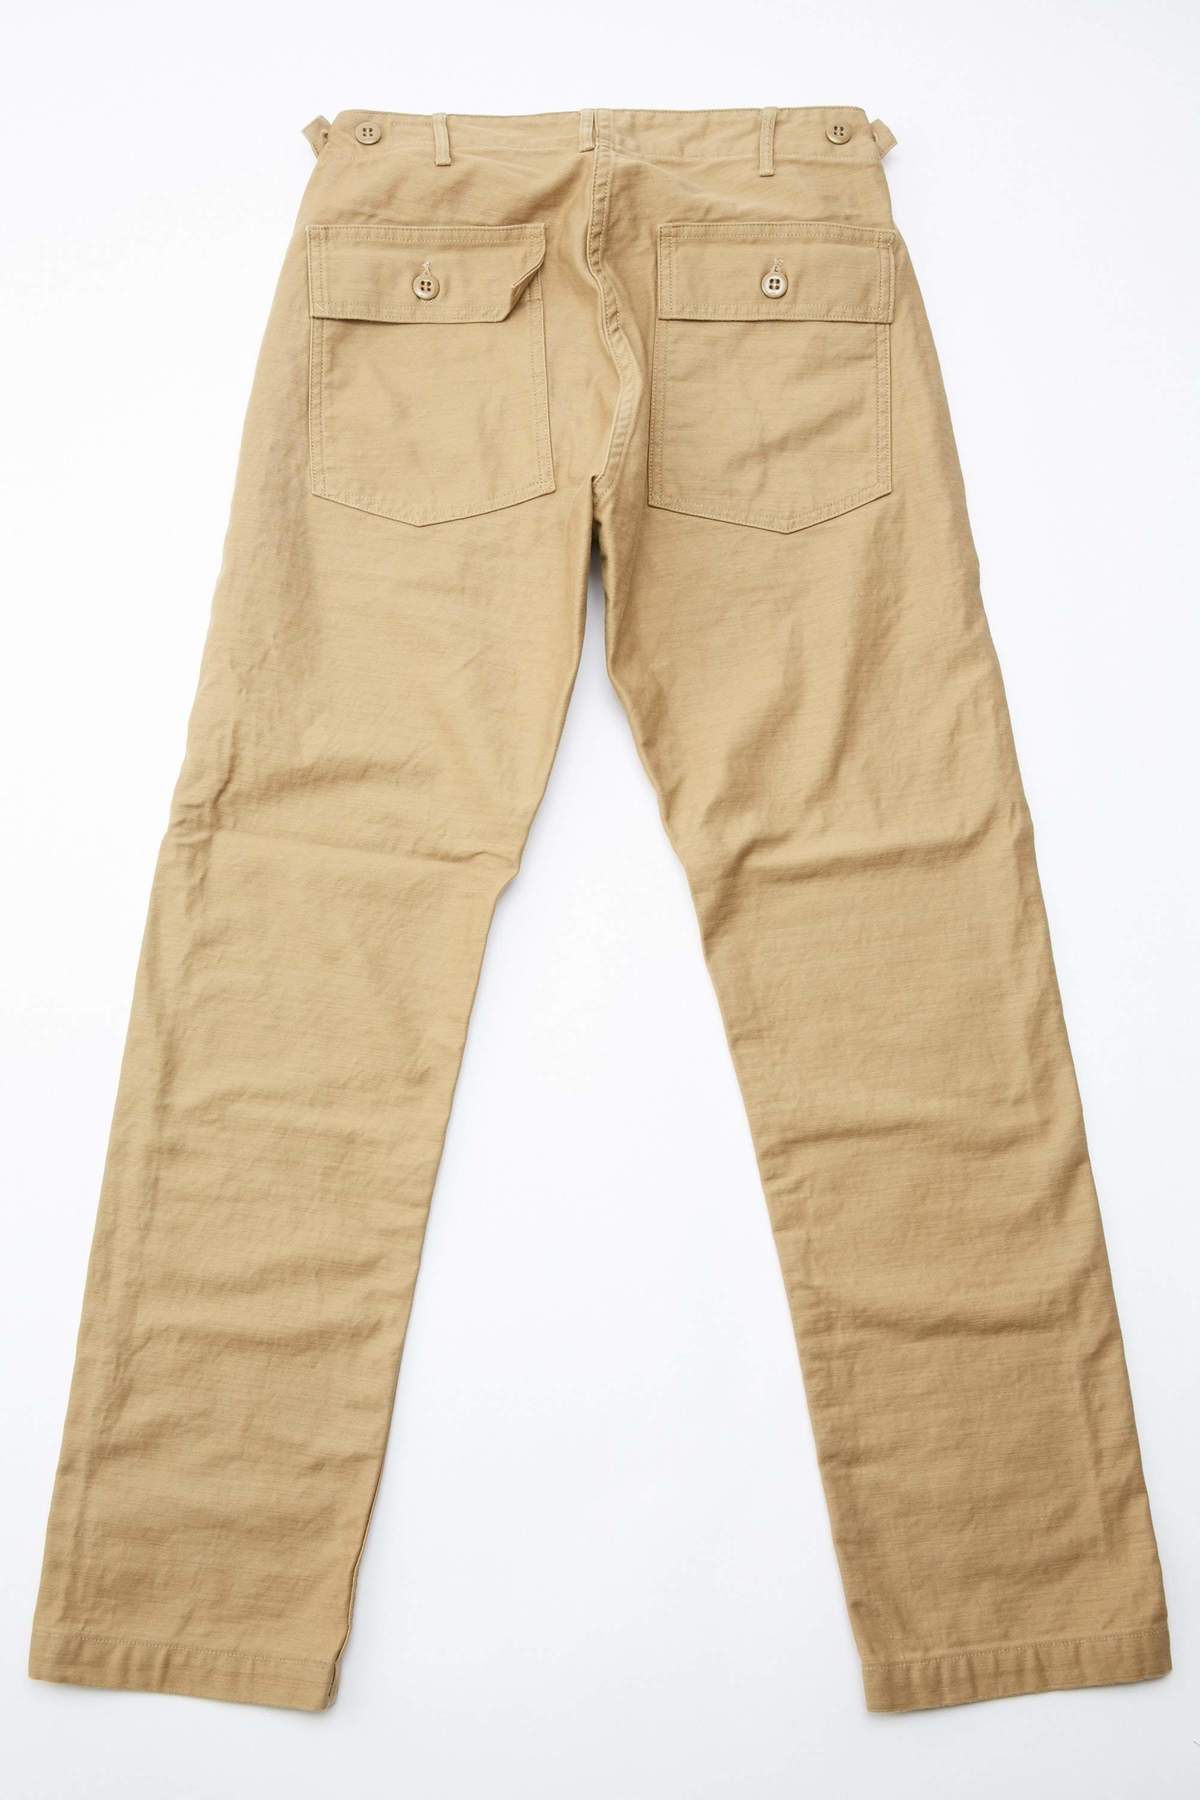 orSlow US Army Fatigue Pants, Khaki